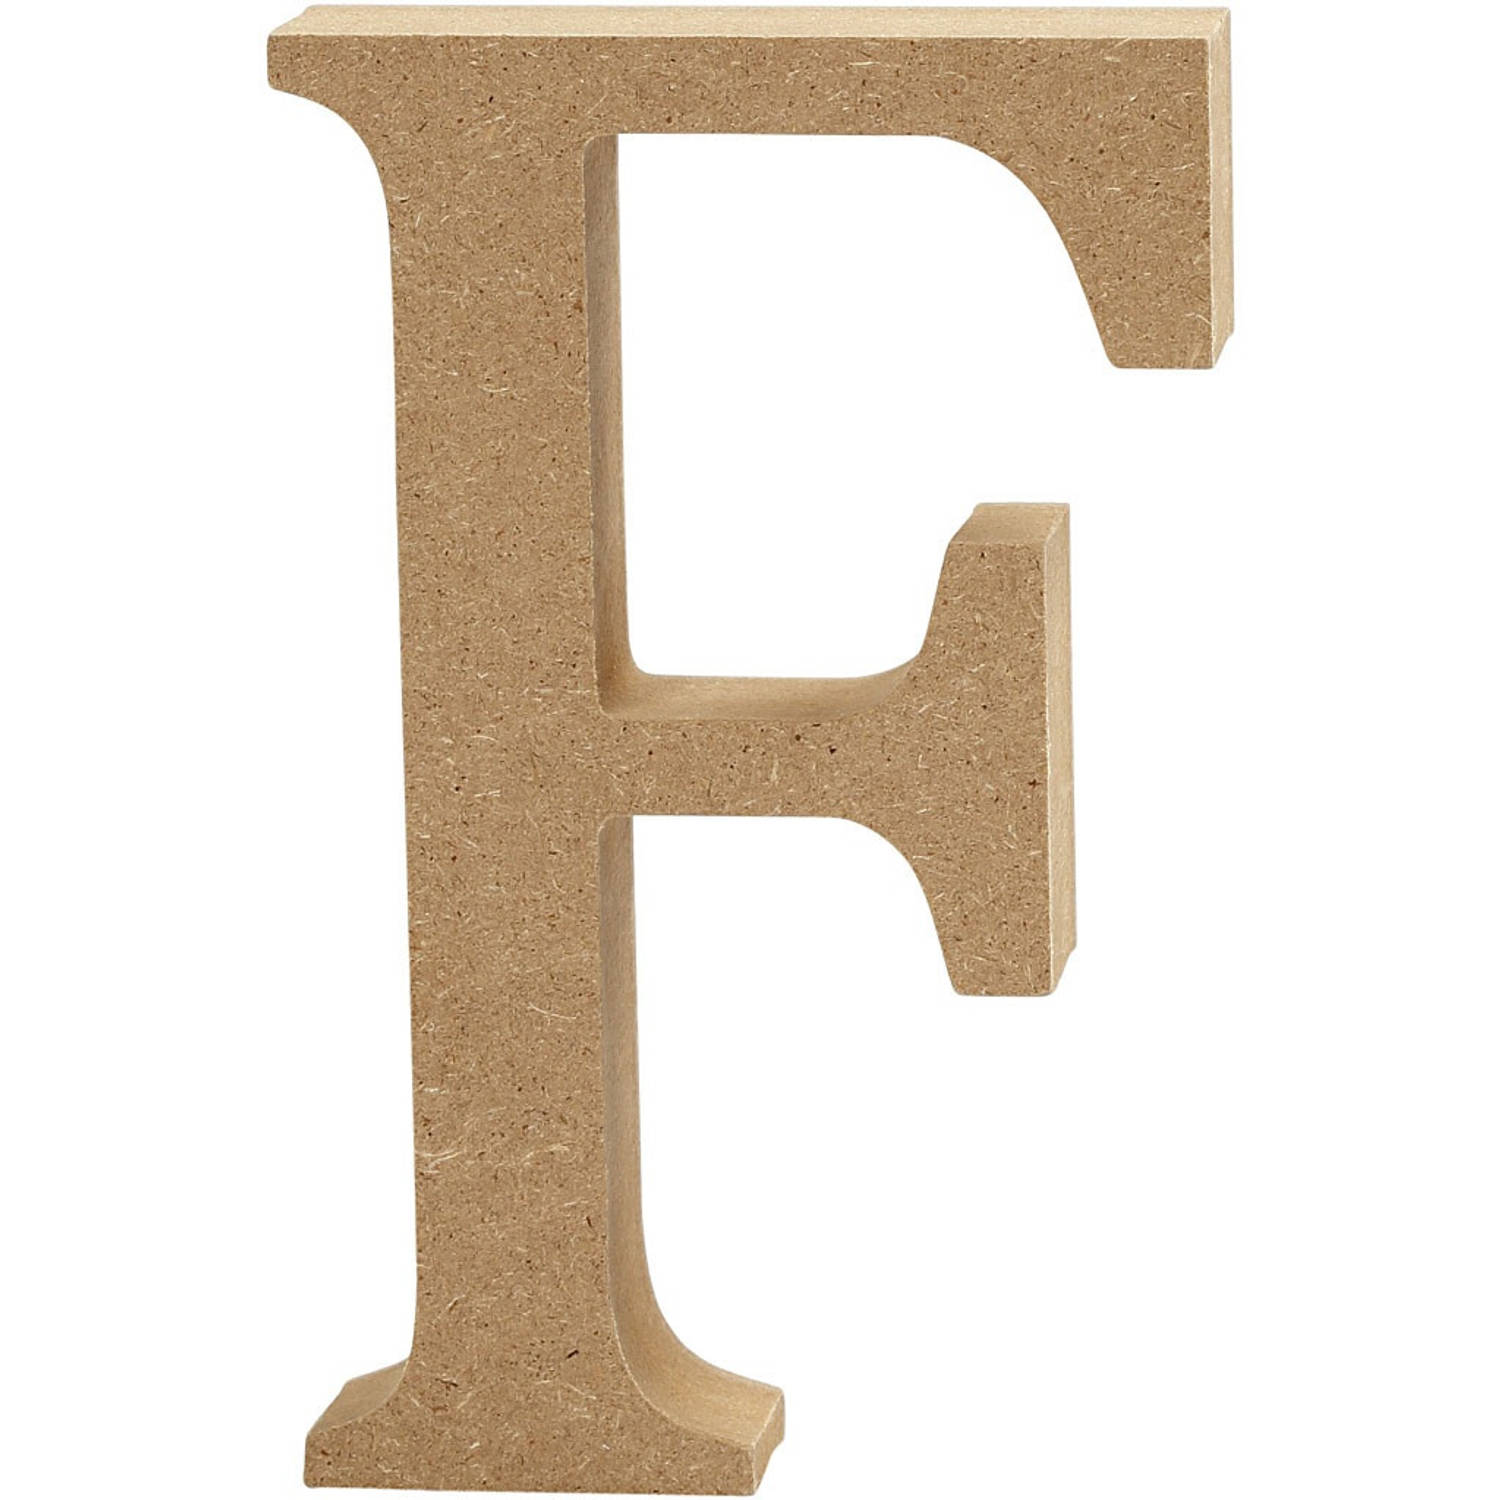 Creative letter F MDF 13 cm